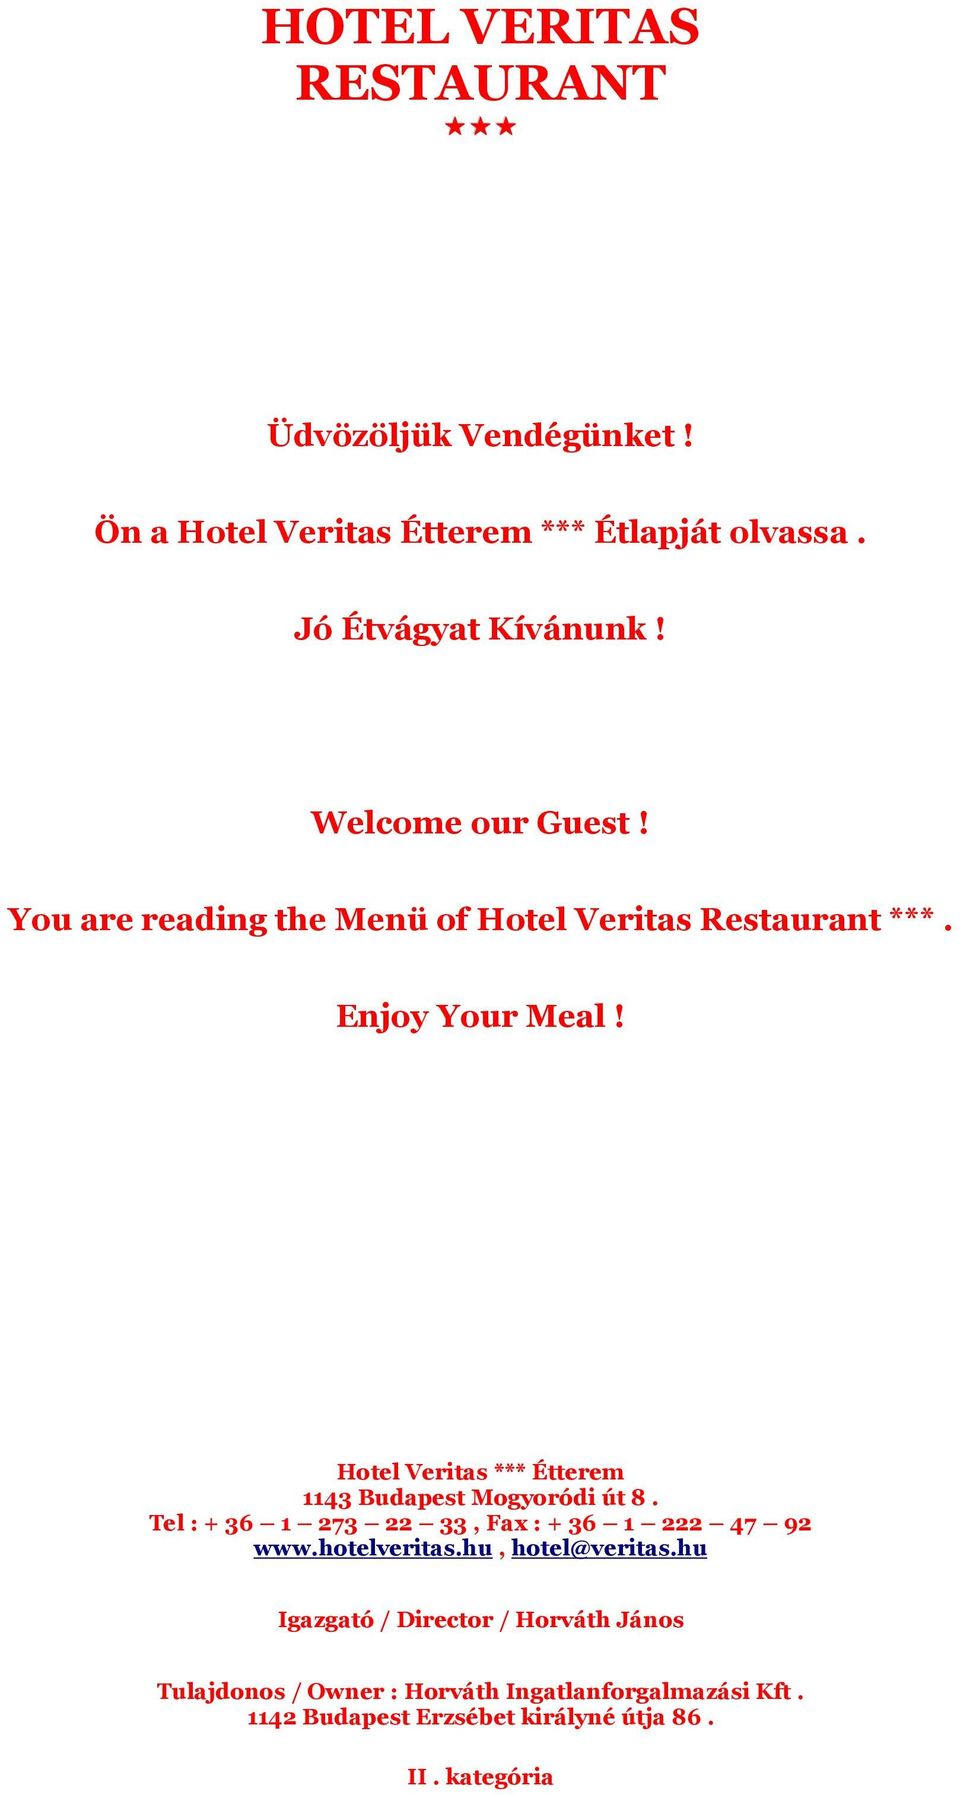 Hotel Veritas *** Étterem 1143 Budapest Mogyoródi út 8. Tel : + 36 1 273 22 33, Fax : + 36 1 222 47 92 www.